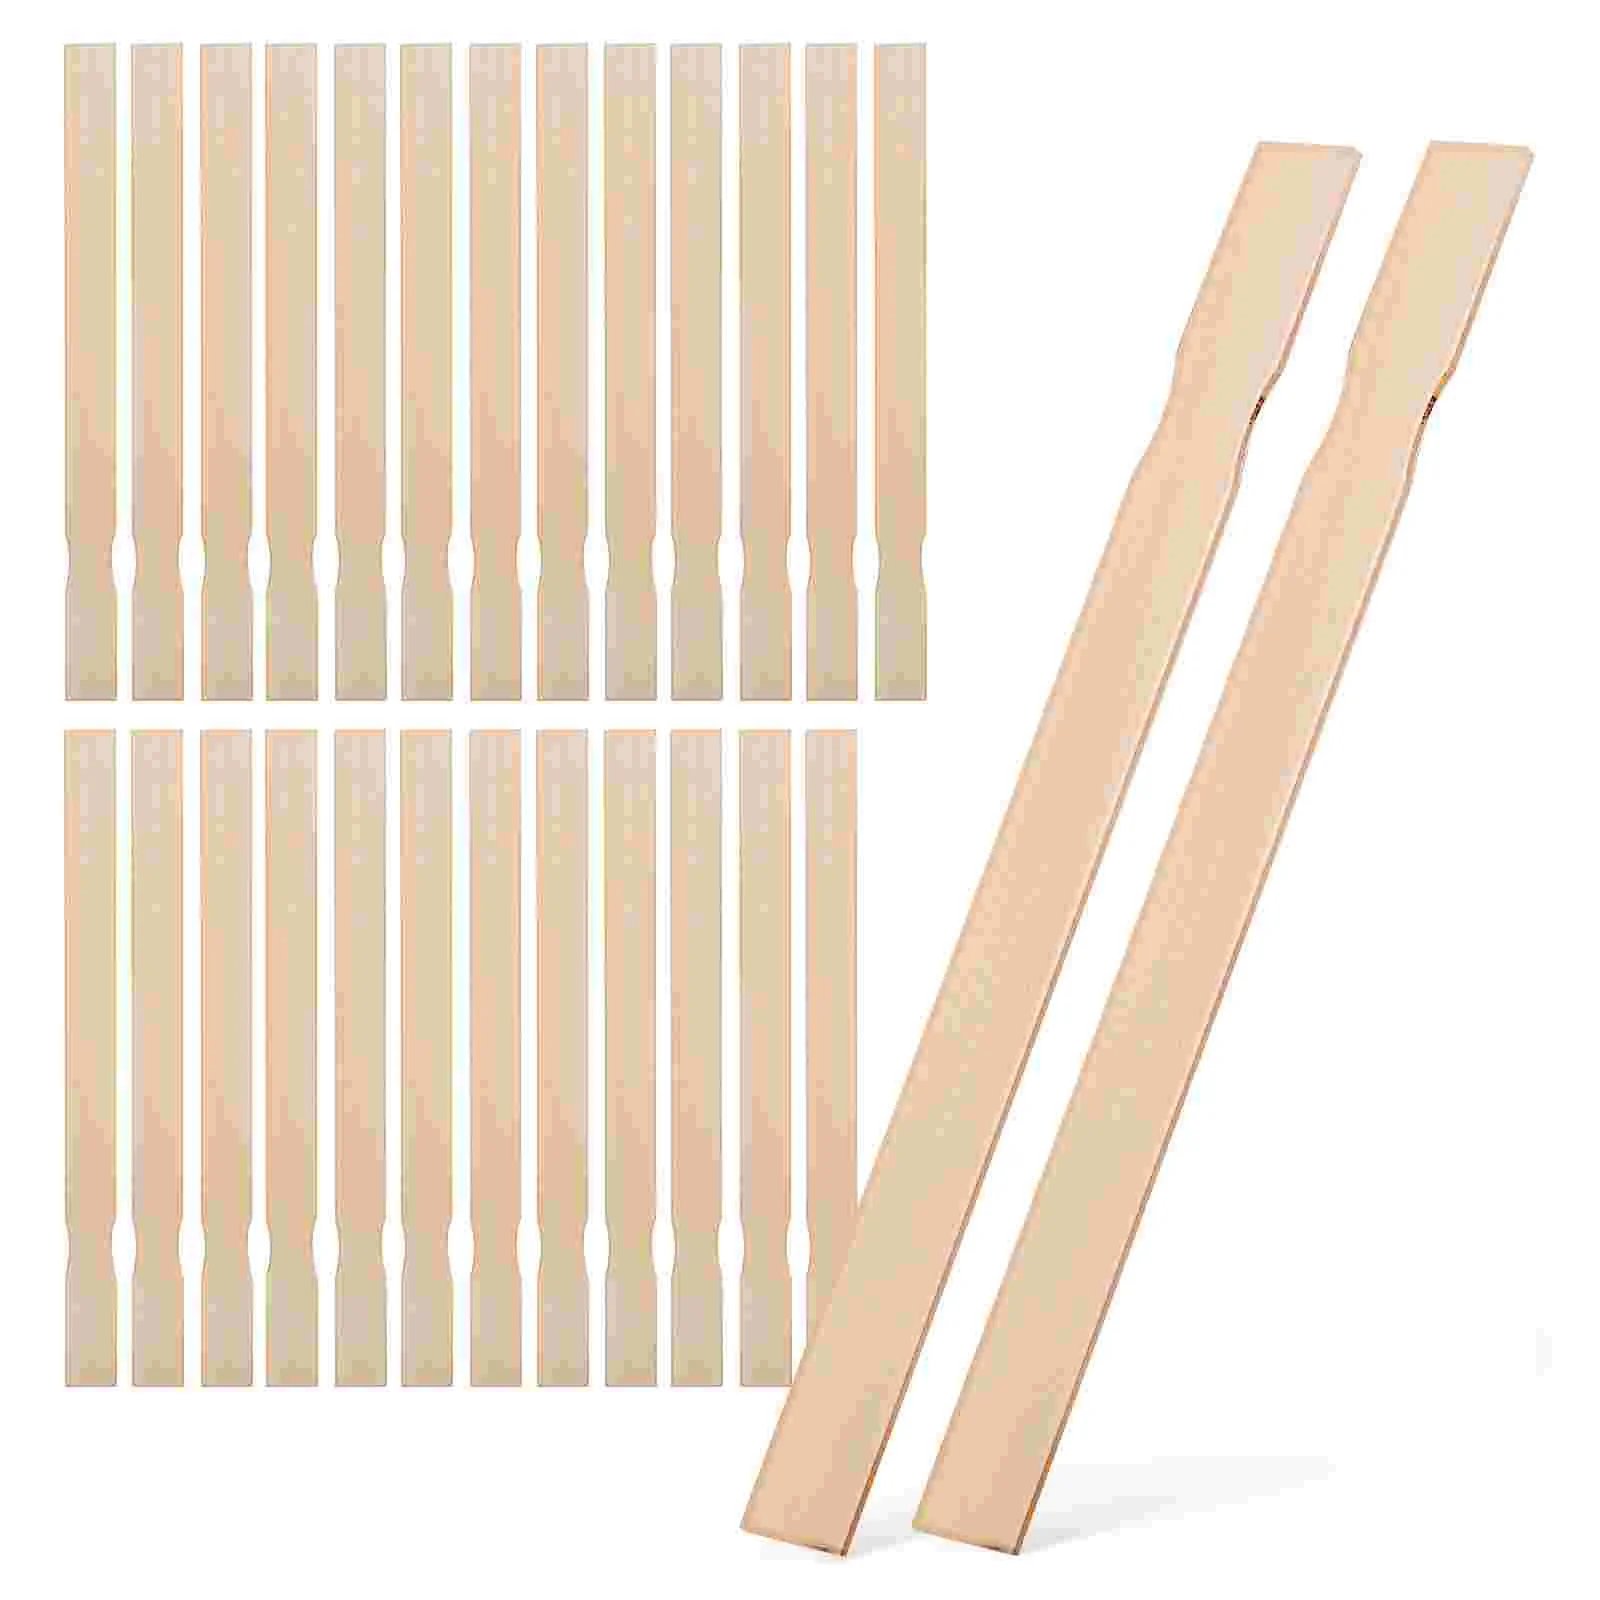 

25 Pcs Wood Strips DIY Handmade Materials Stir Sticks Stirring Rod Bar Paint Stirrer Wooden Crafts